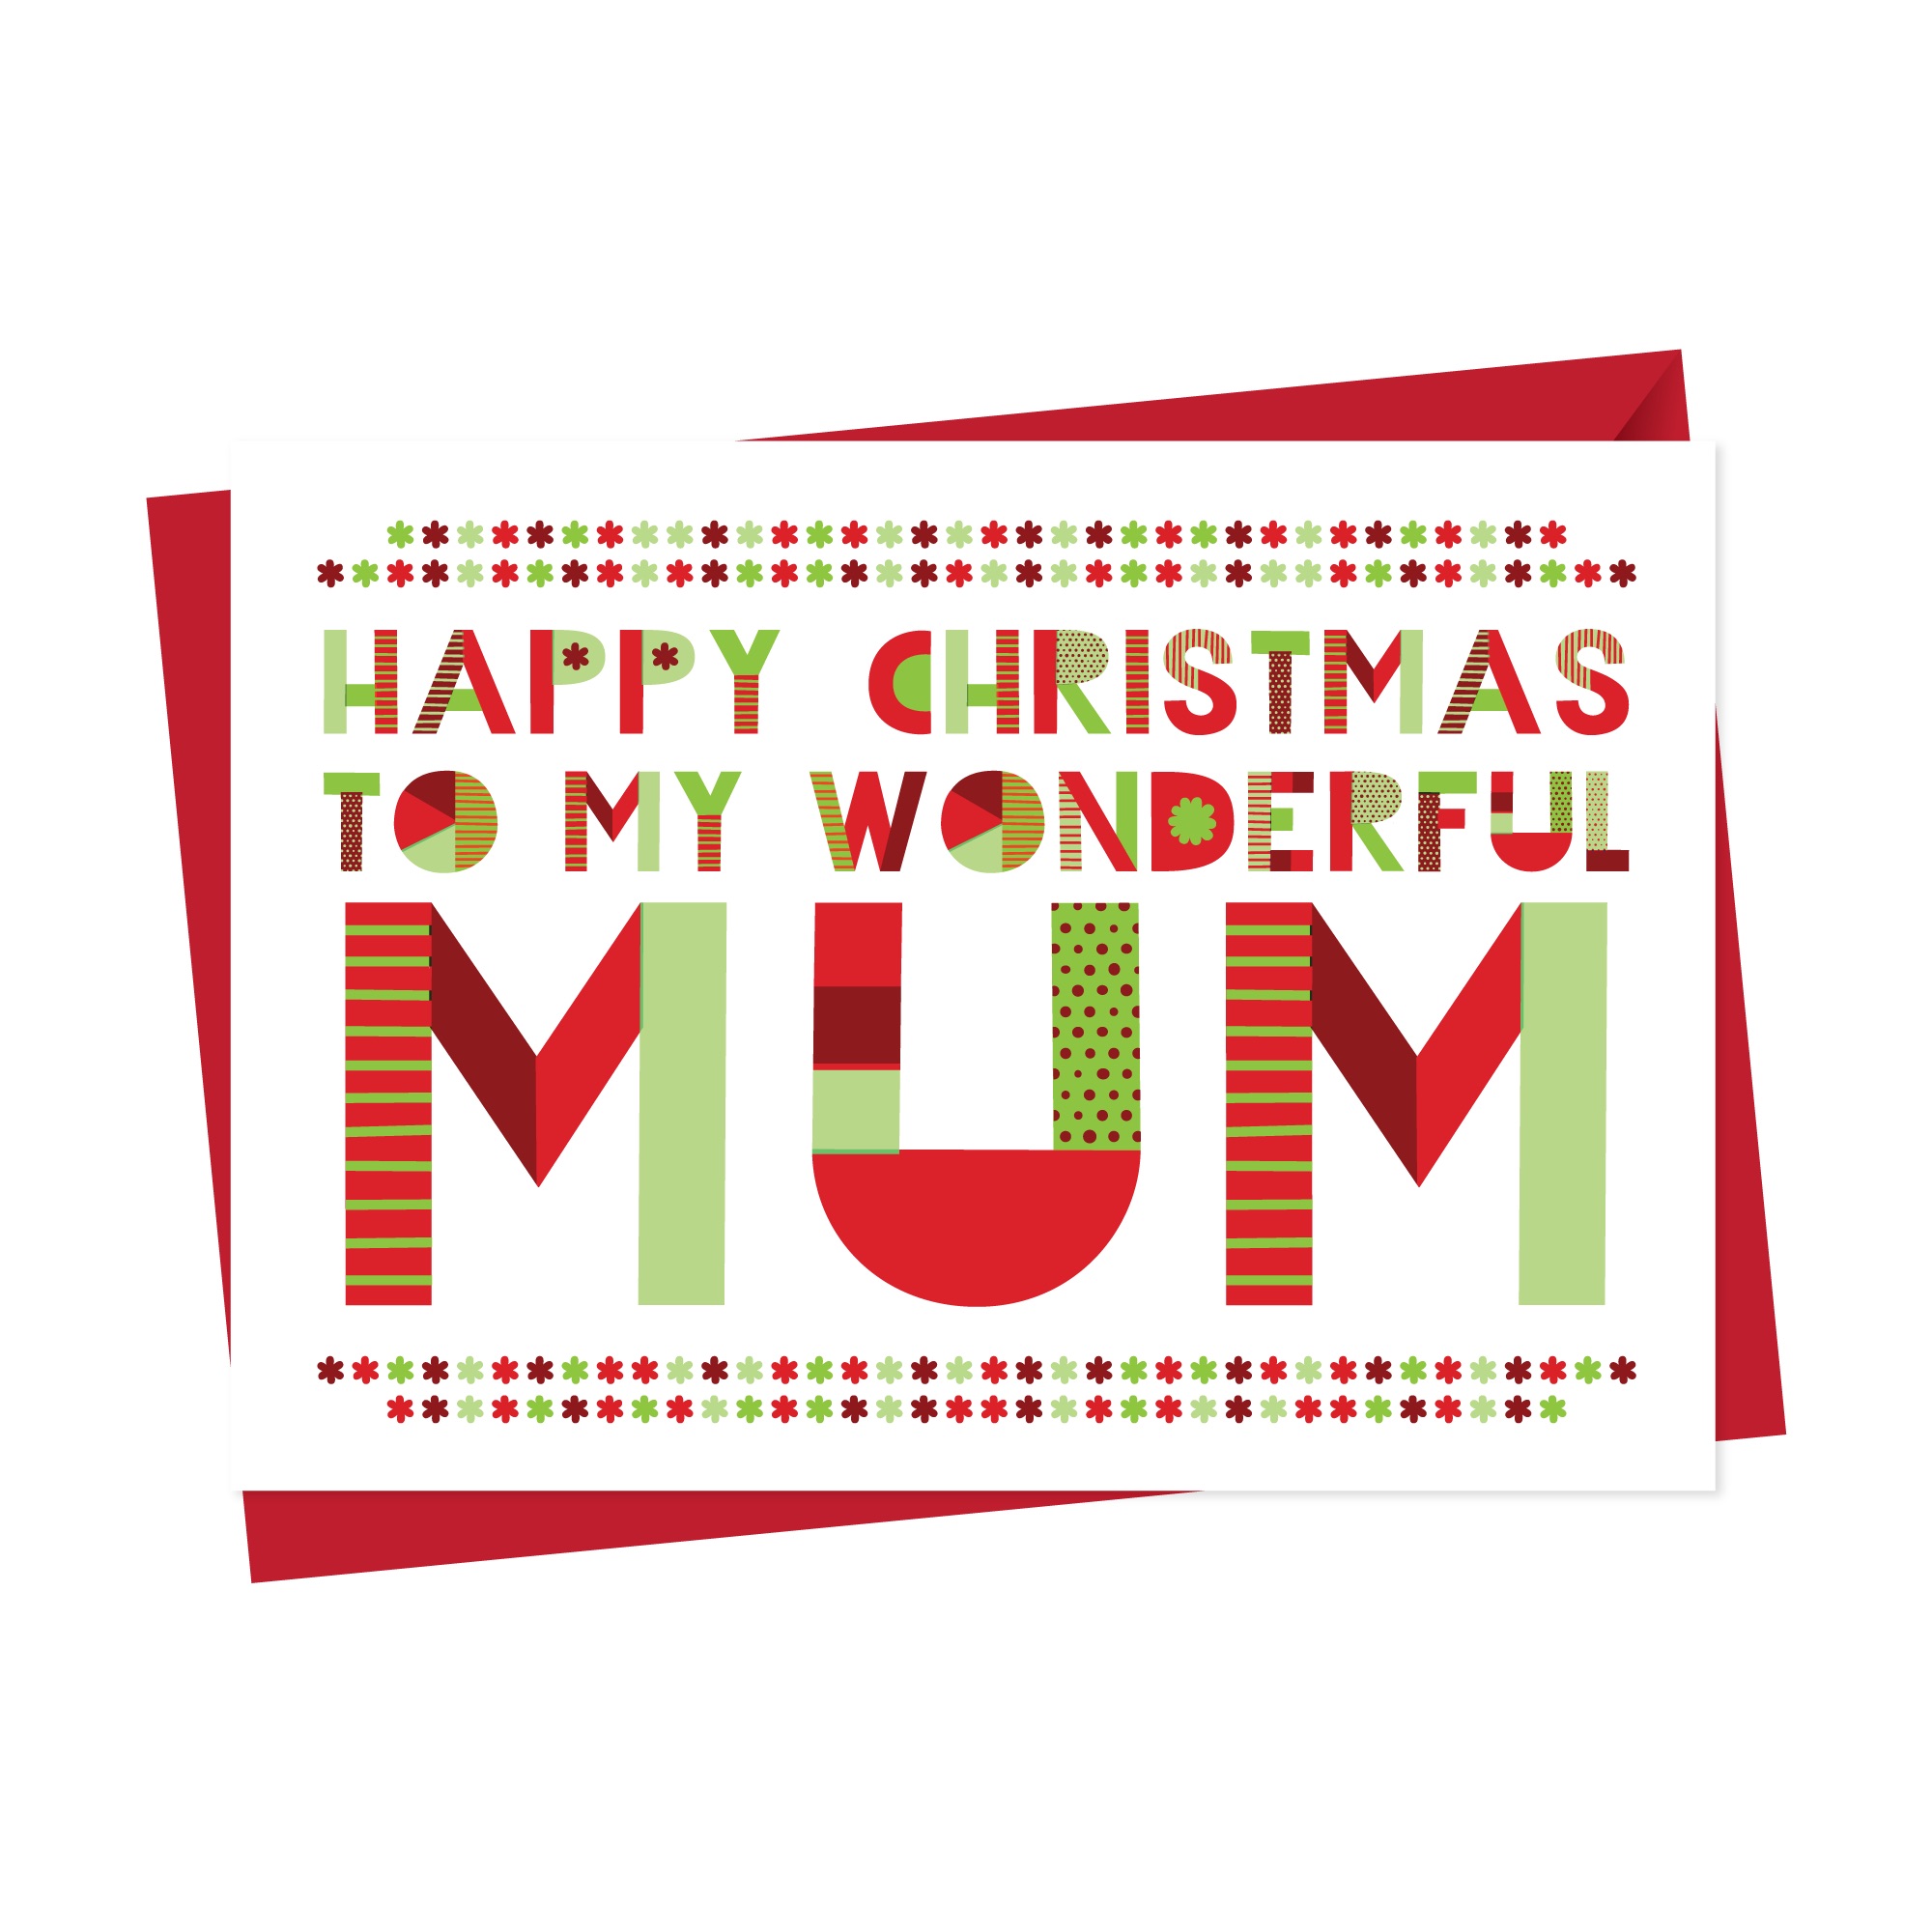 Wonderful Mum/Mummy/Mother Christmas Card